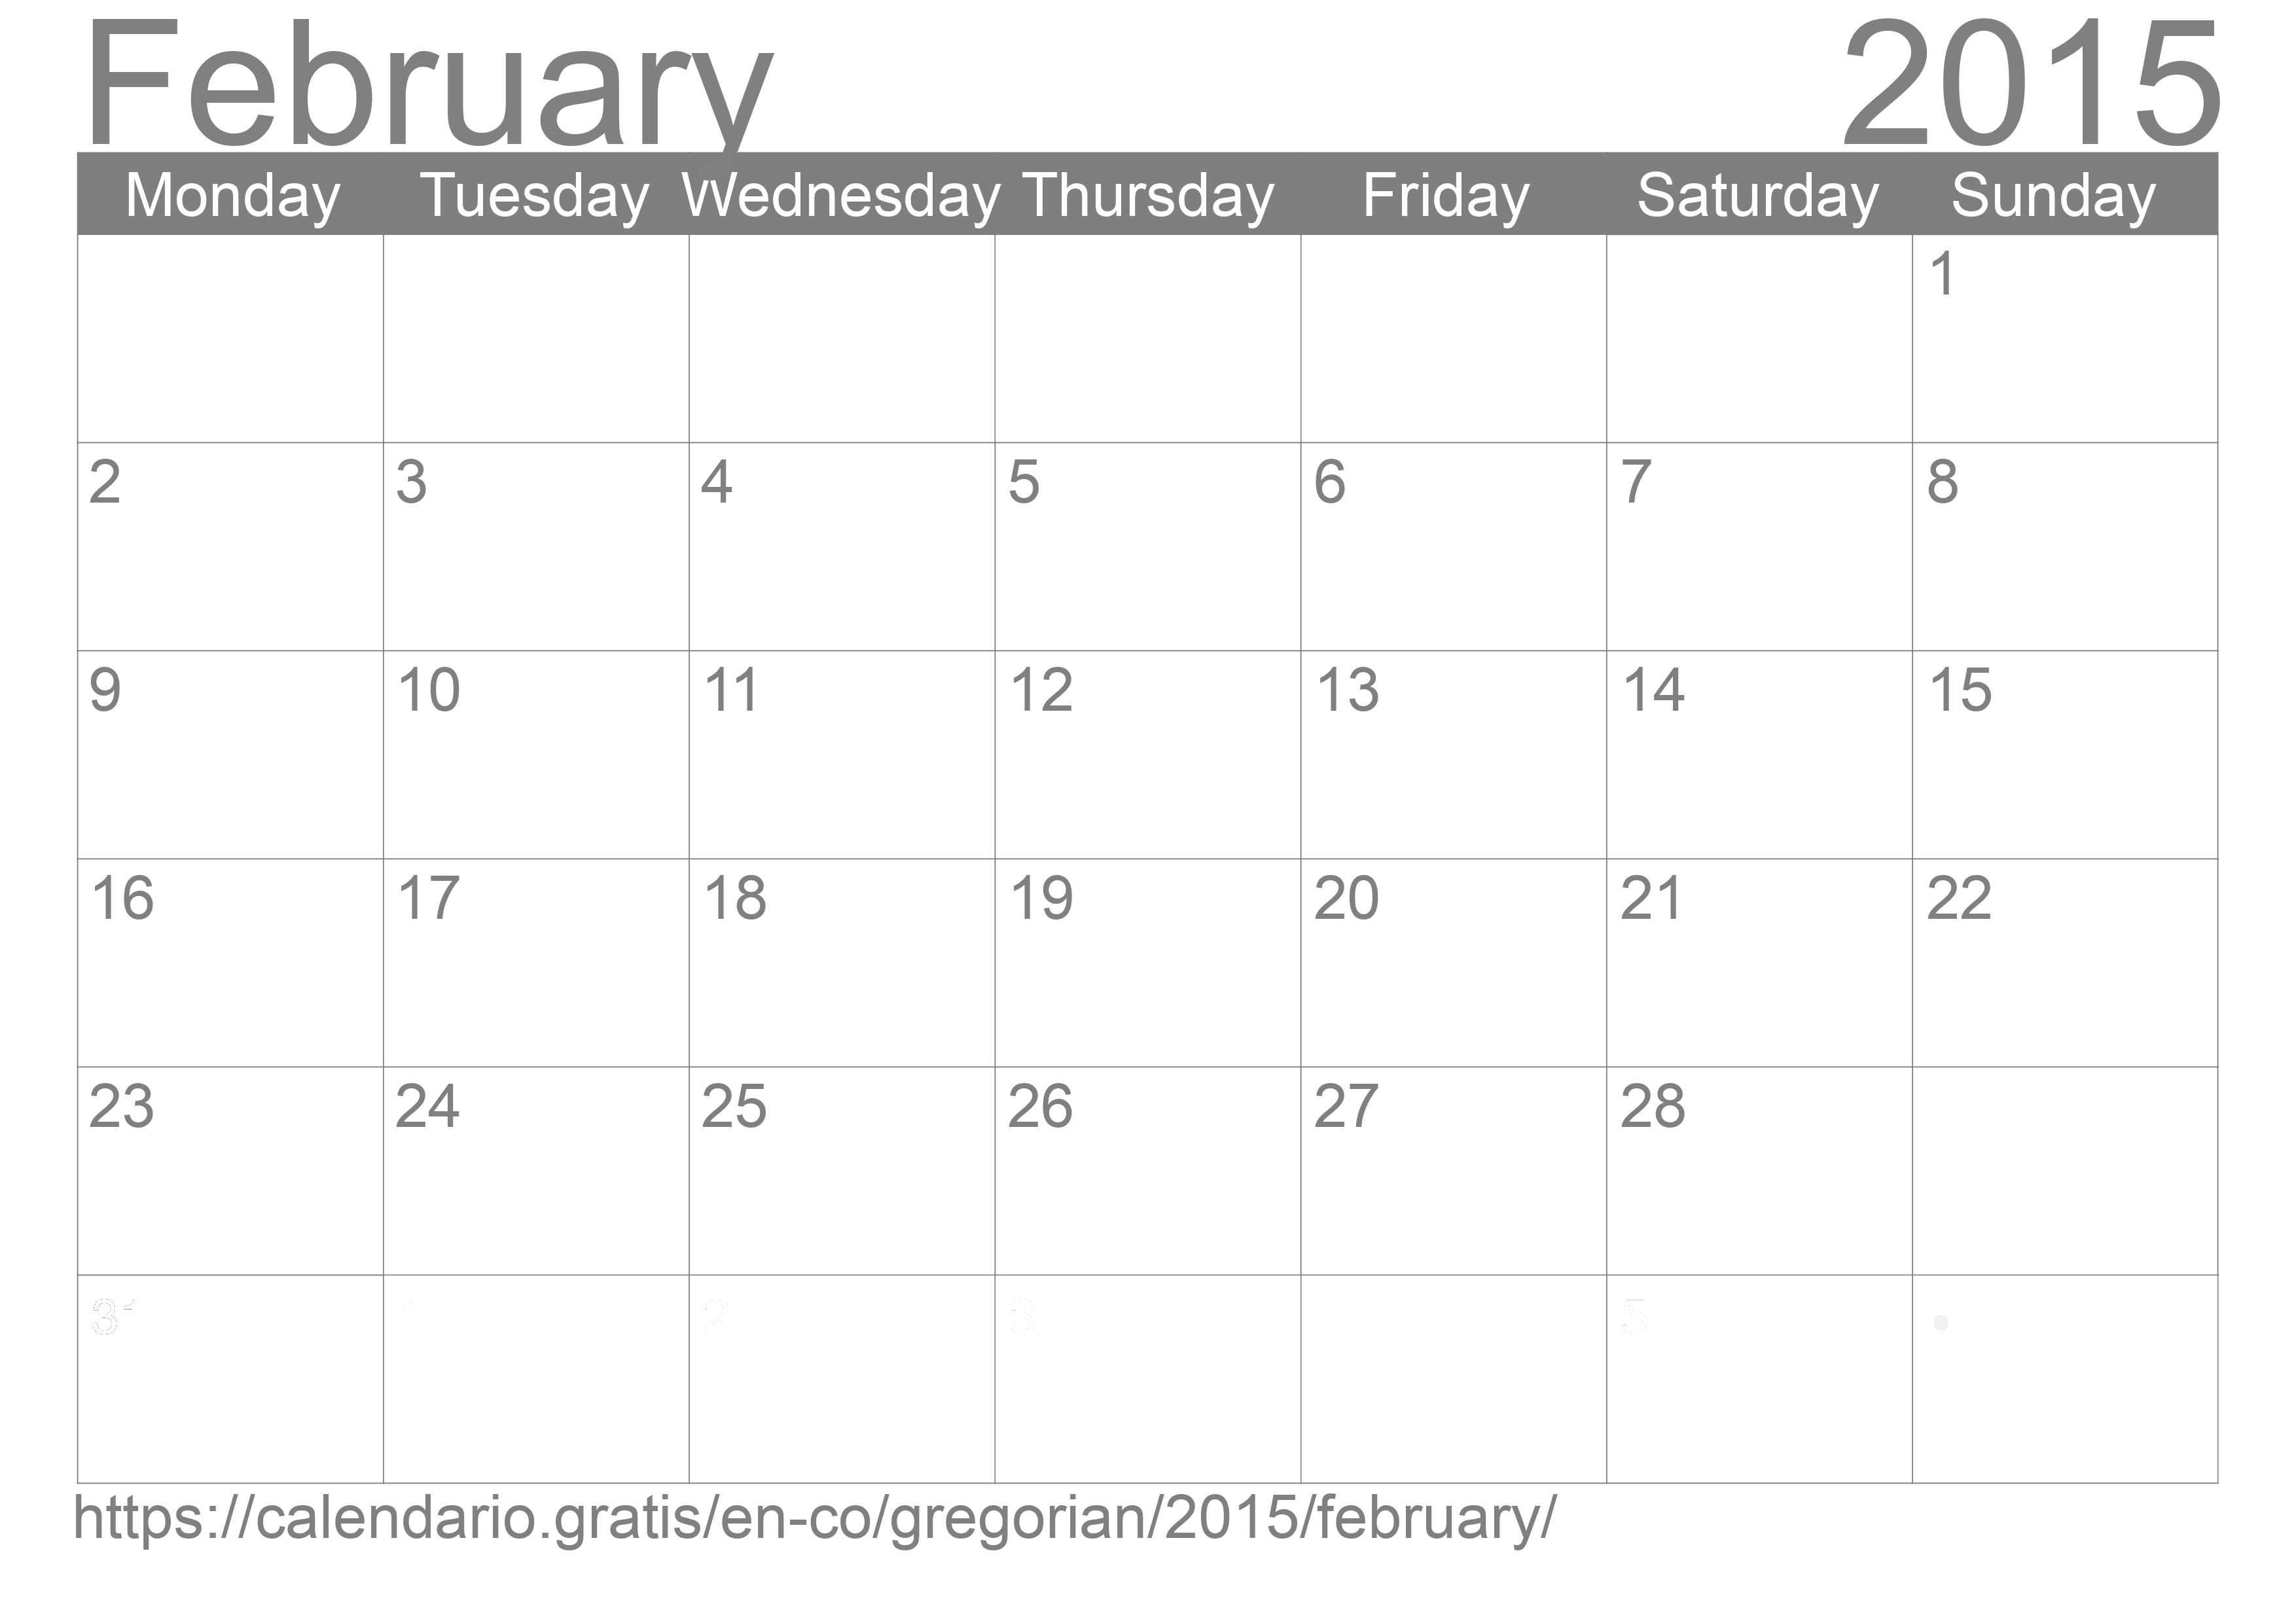 Calendar February 2015 to print